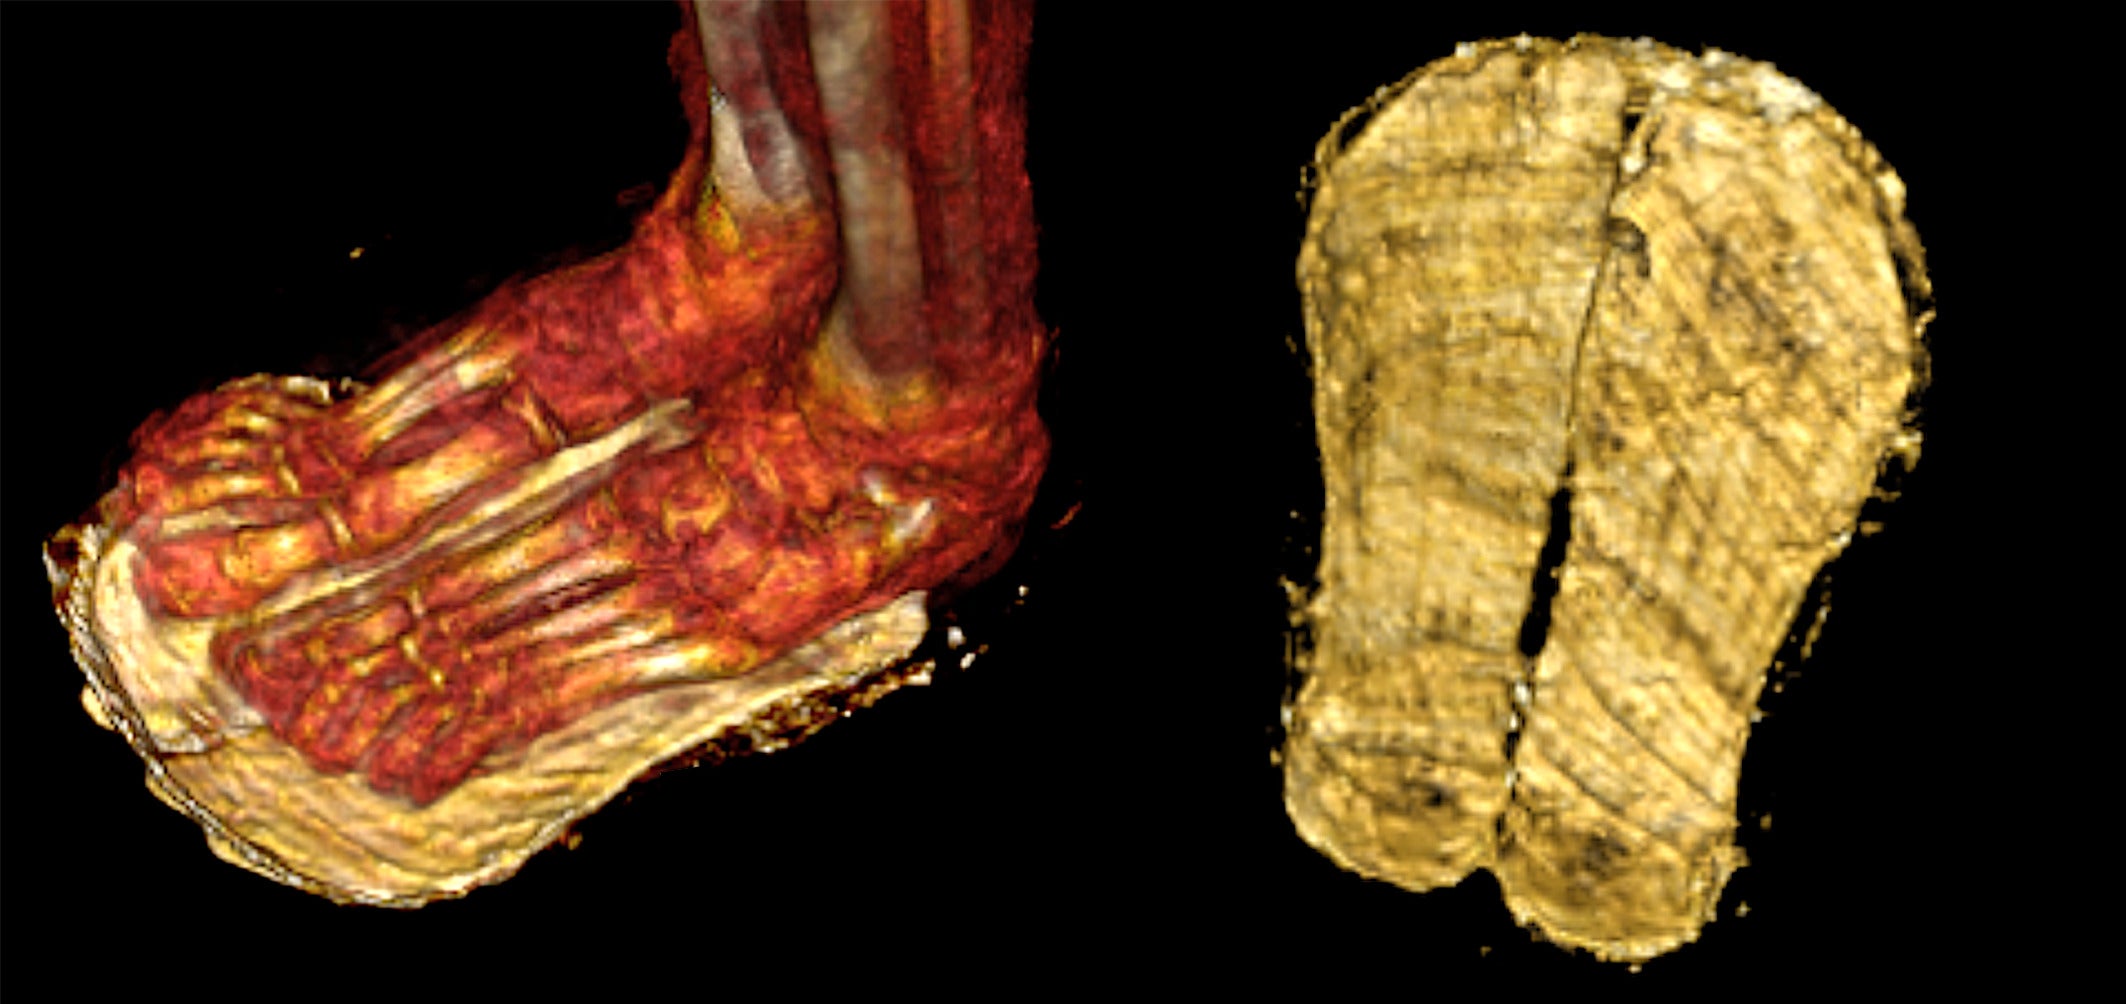 CT scans revealed sandals on the boy's feet. (Image: SN Saleem, SA Seddik, M el-Halwagy)